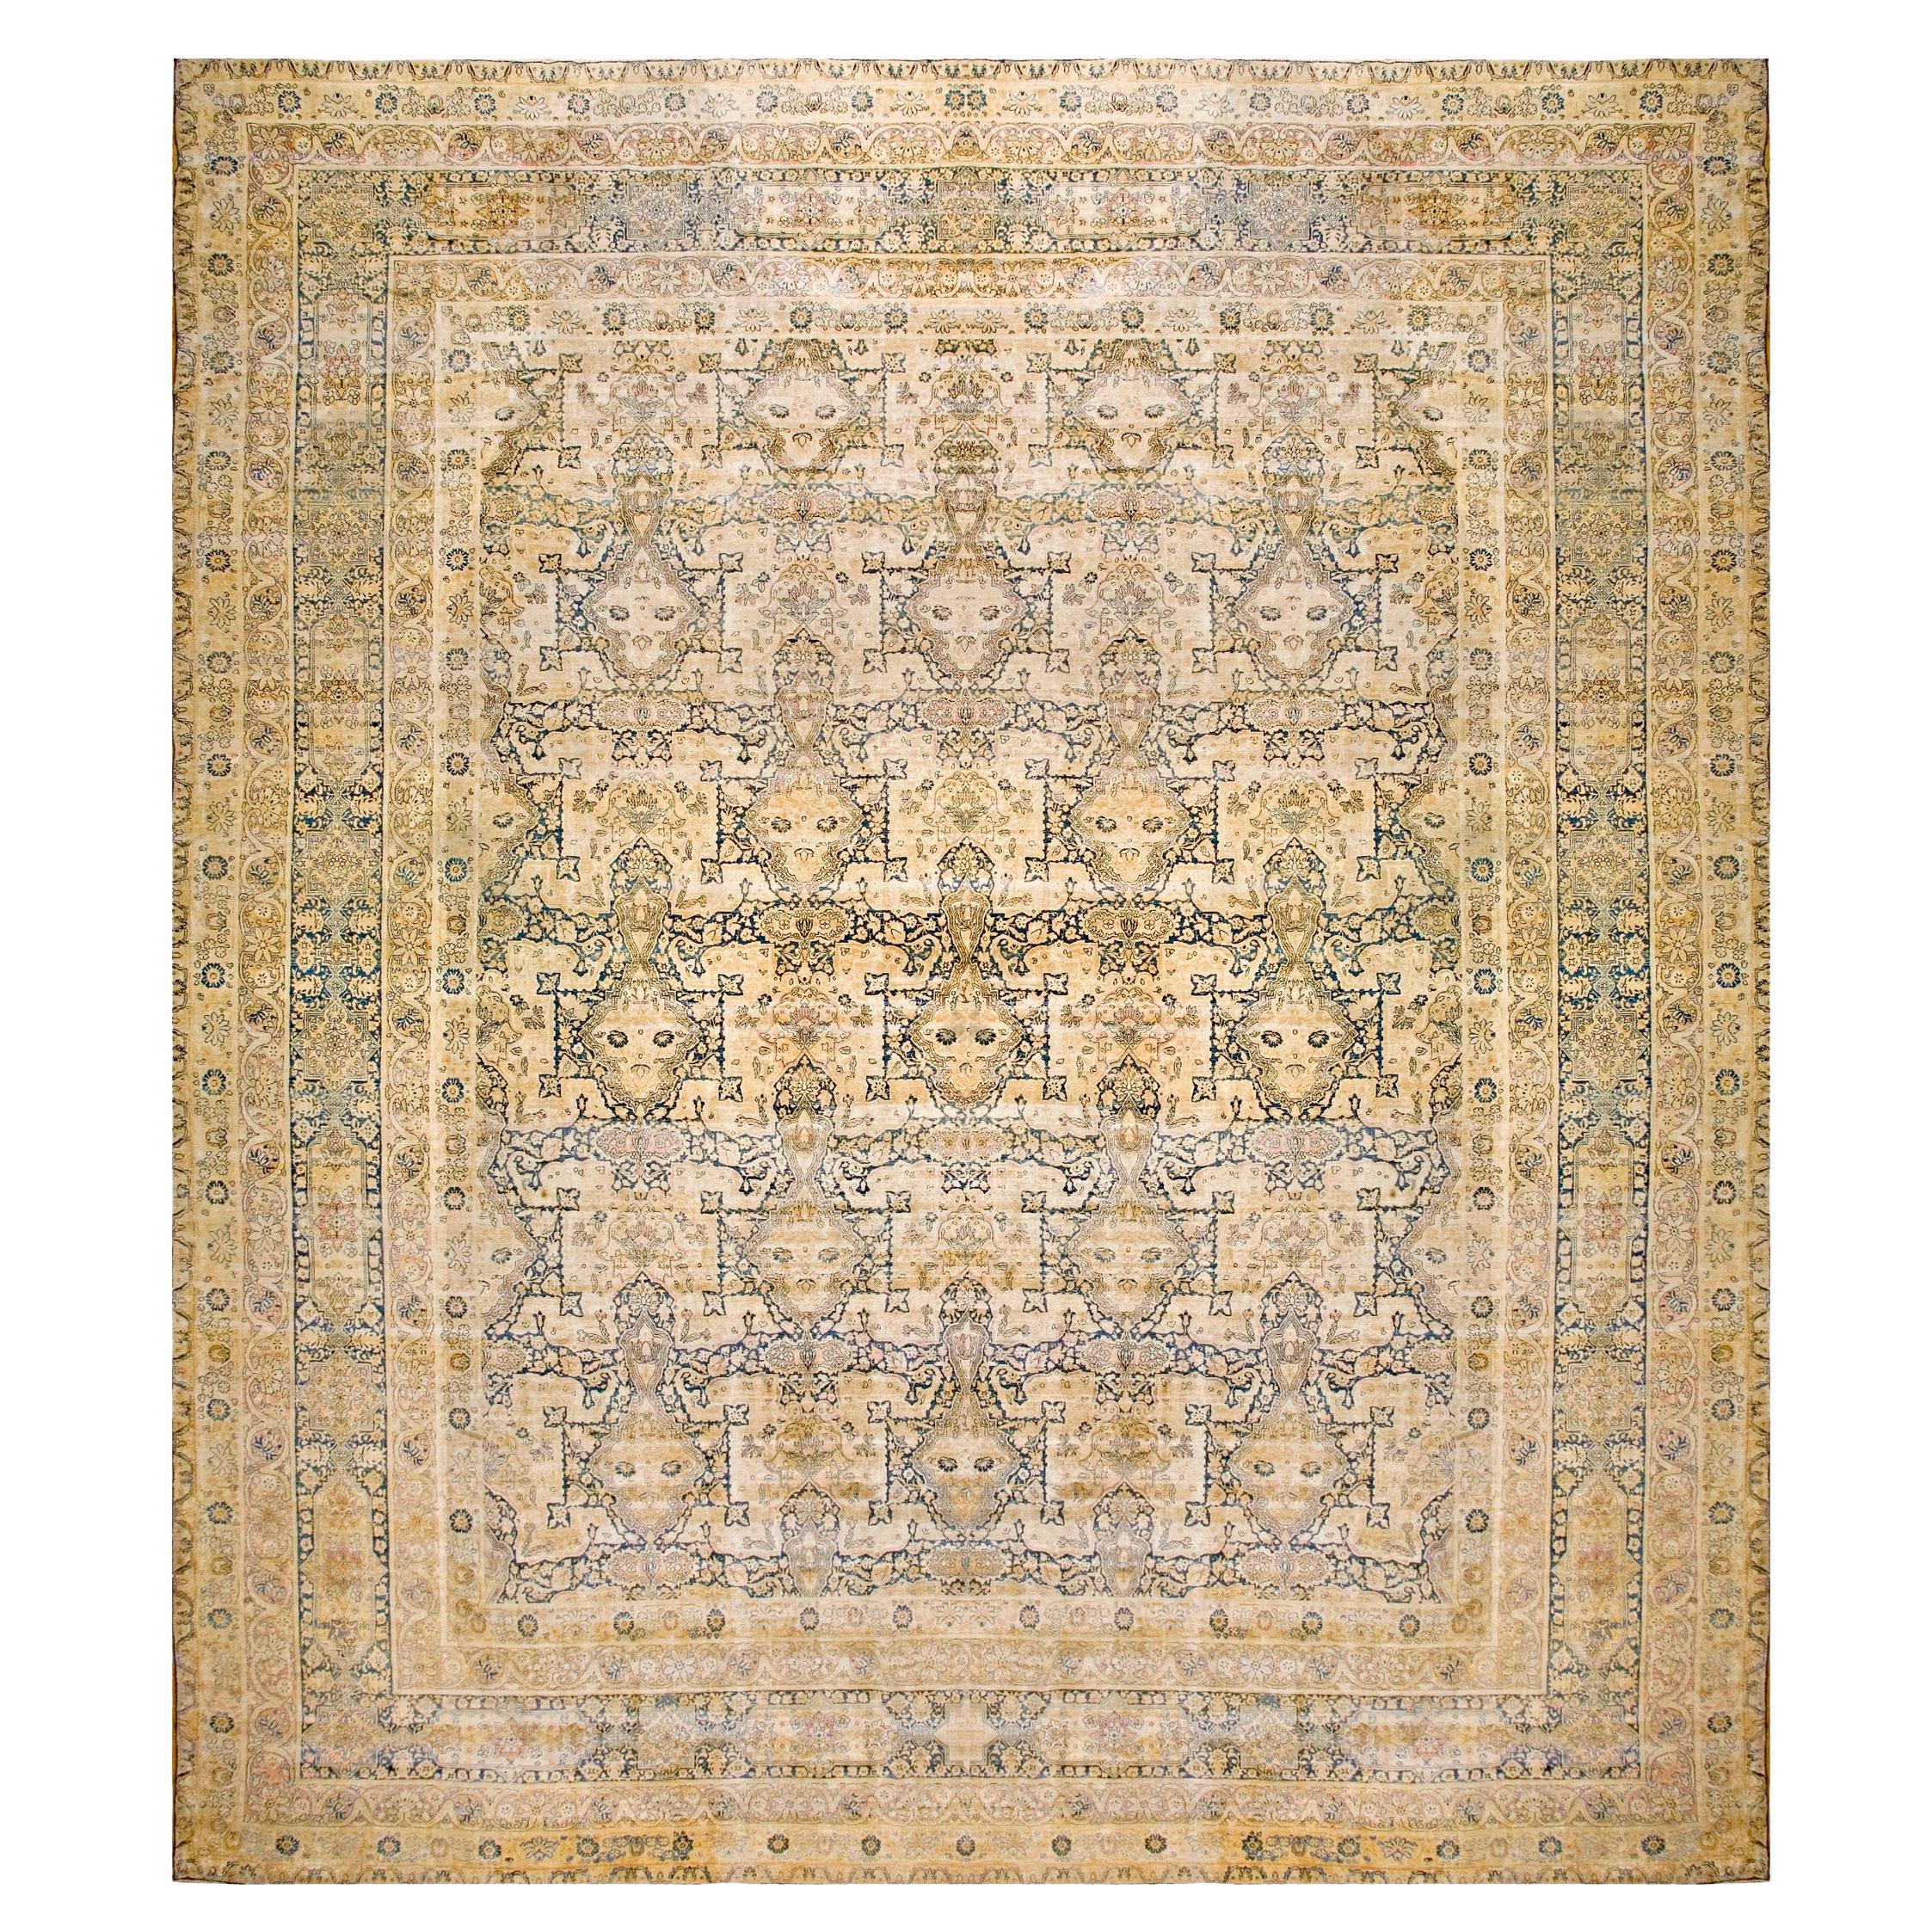 19th Century S.E. Persian Kerman Laver Carpet ( 17' x 19'10" - 518 x 605 ) For Sale